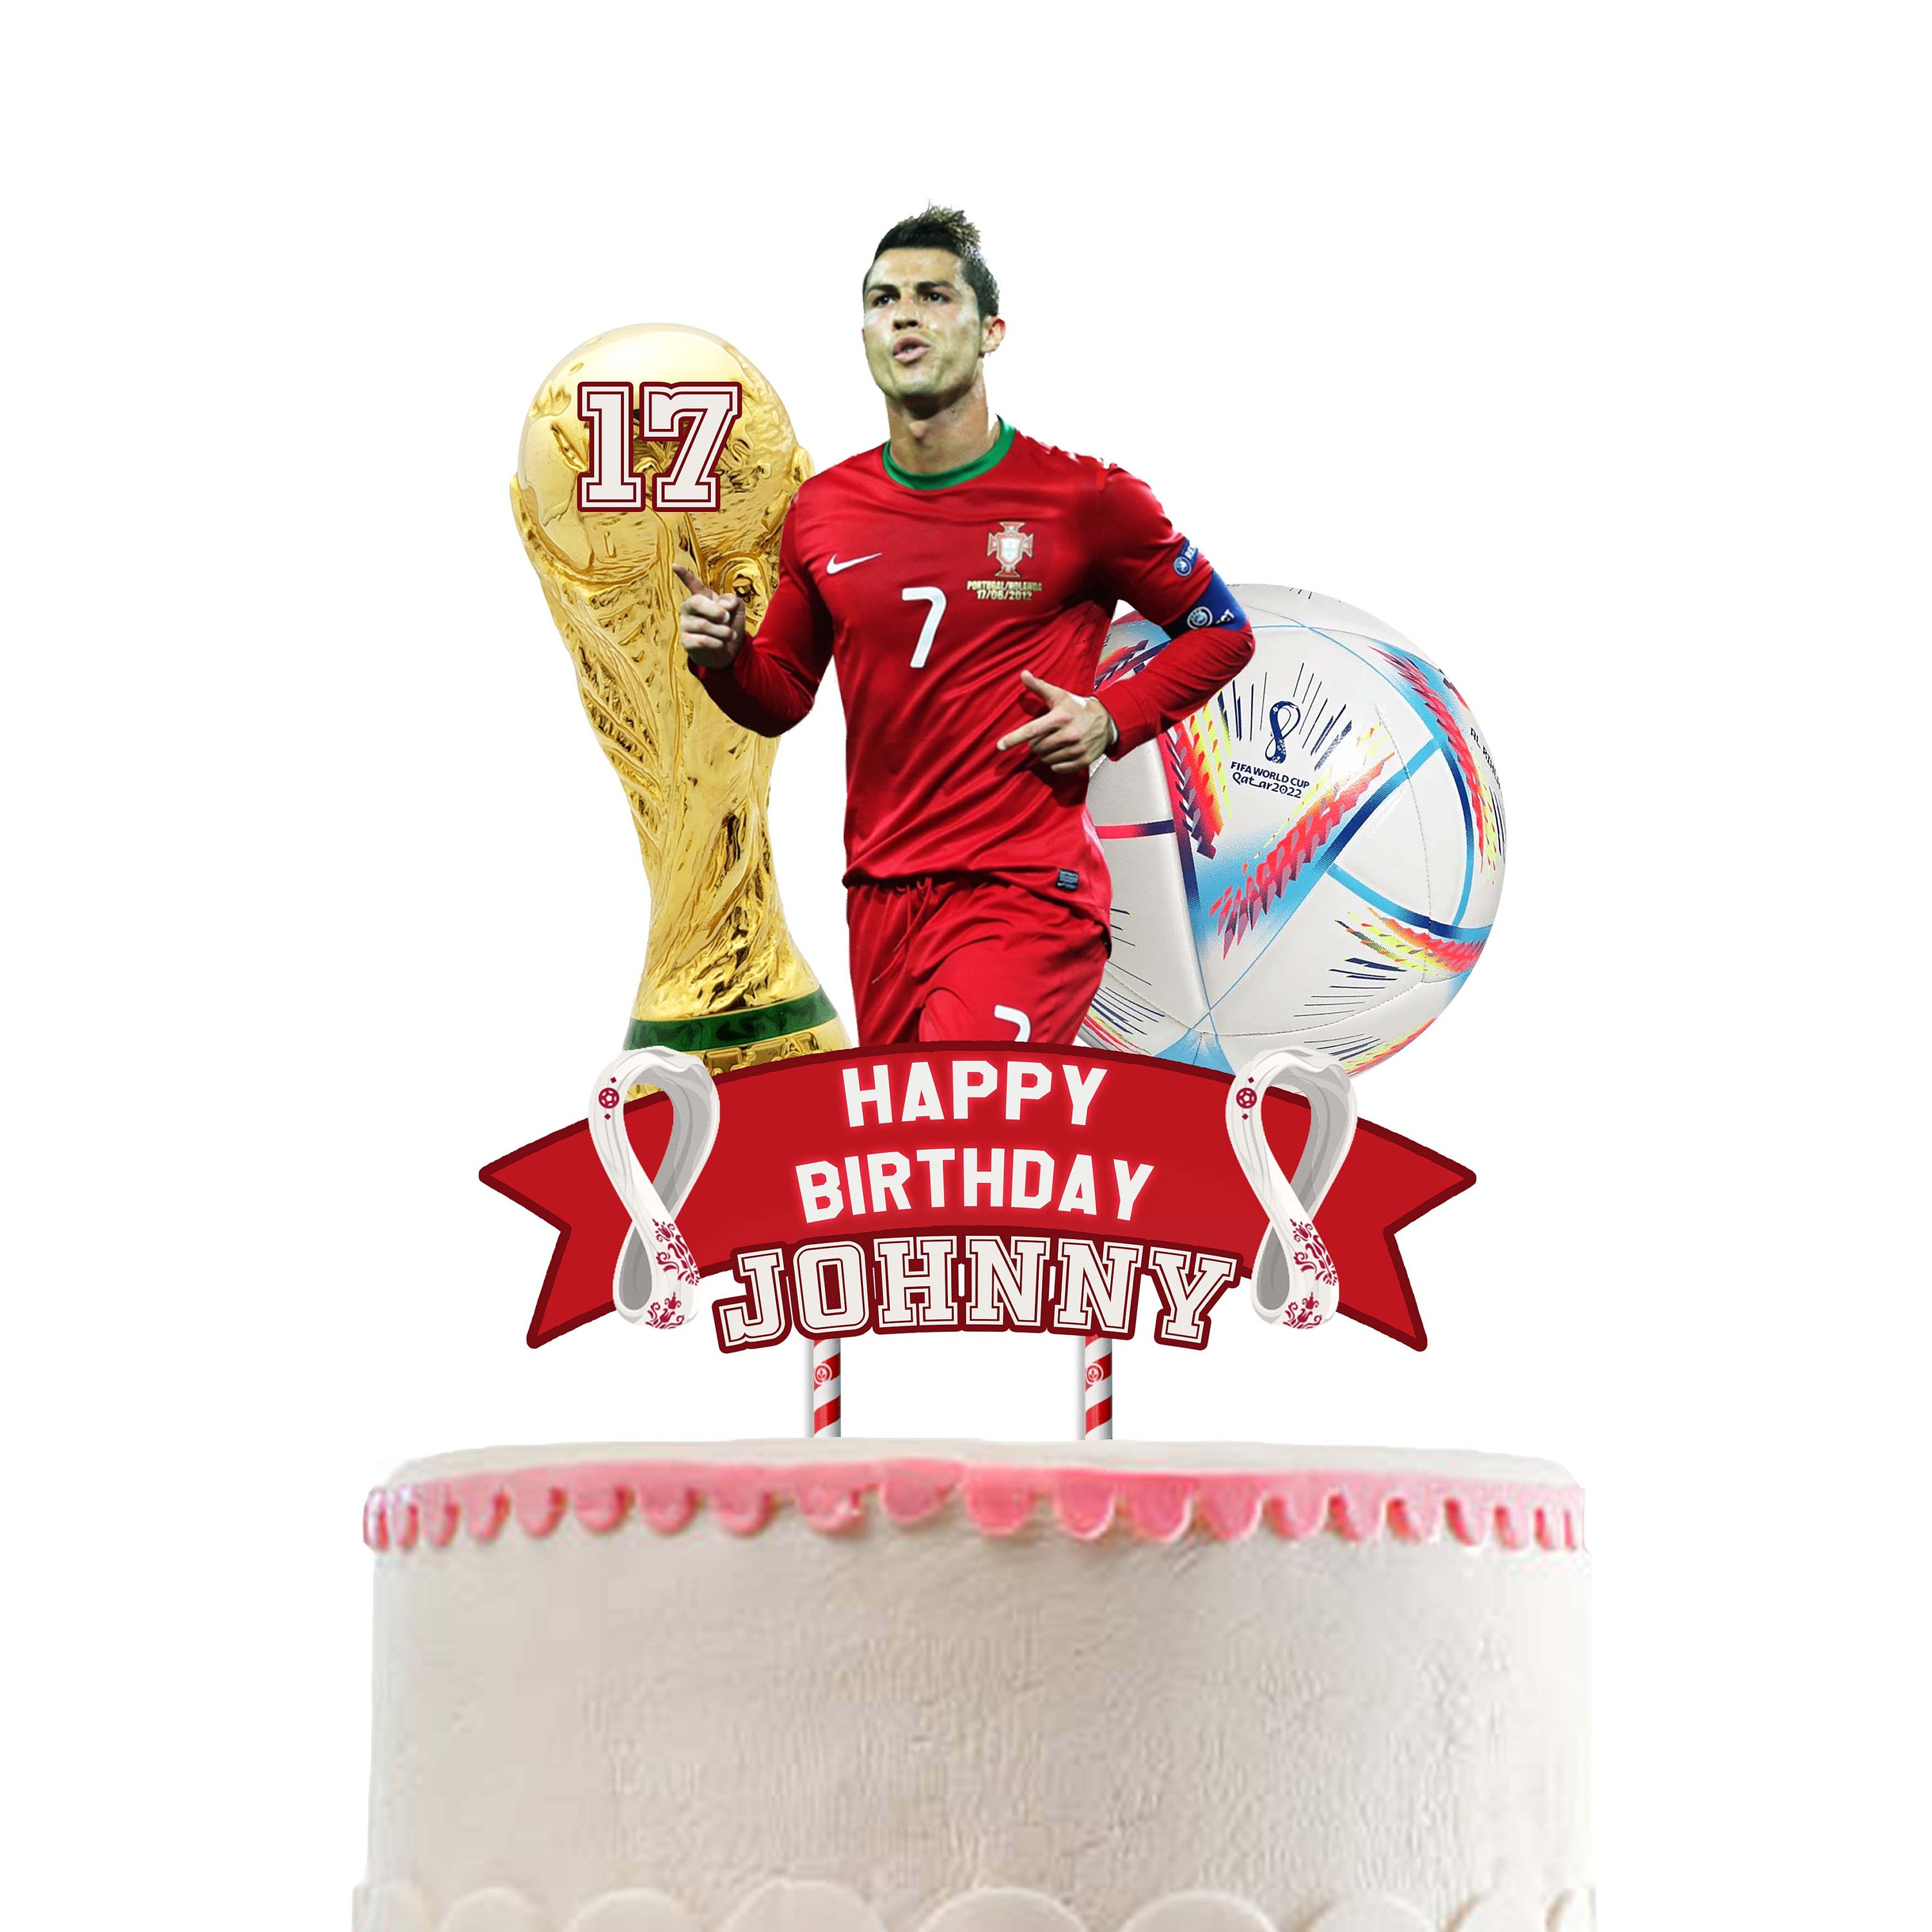 Juventus soccer game birthday cake with jersey logo:juve cristiano ronaldo  cr7 football team - YouTube